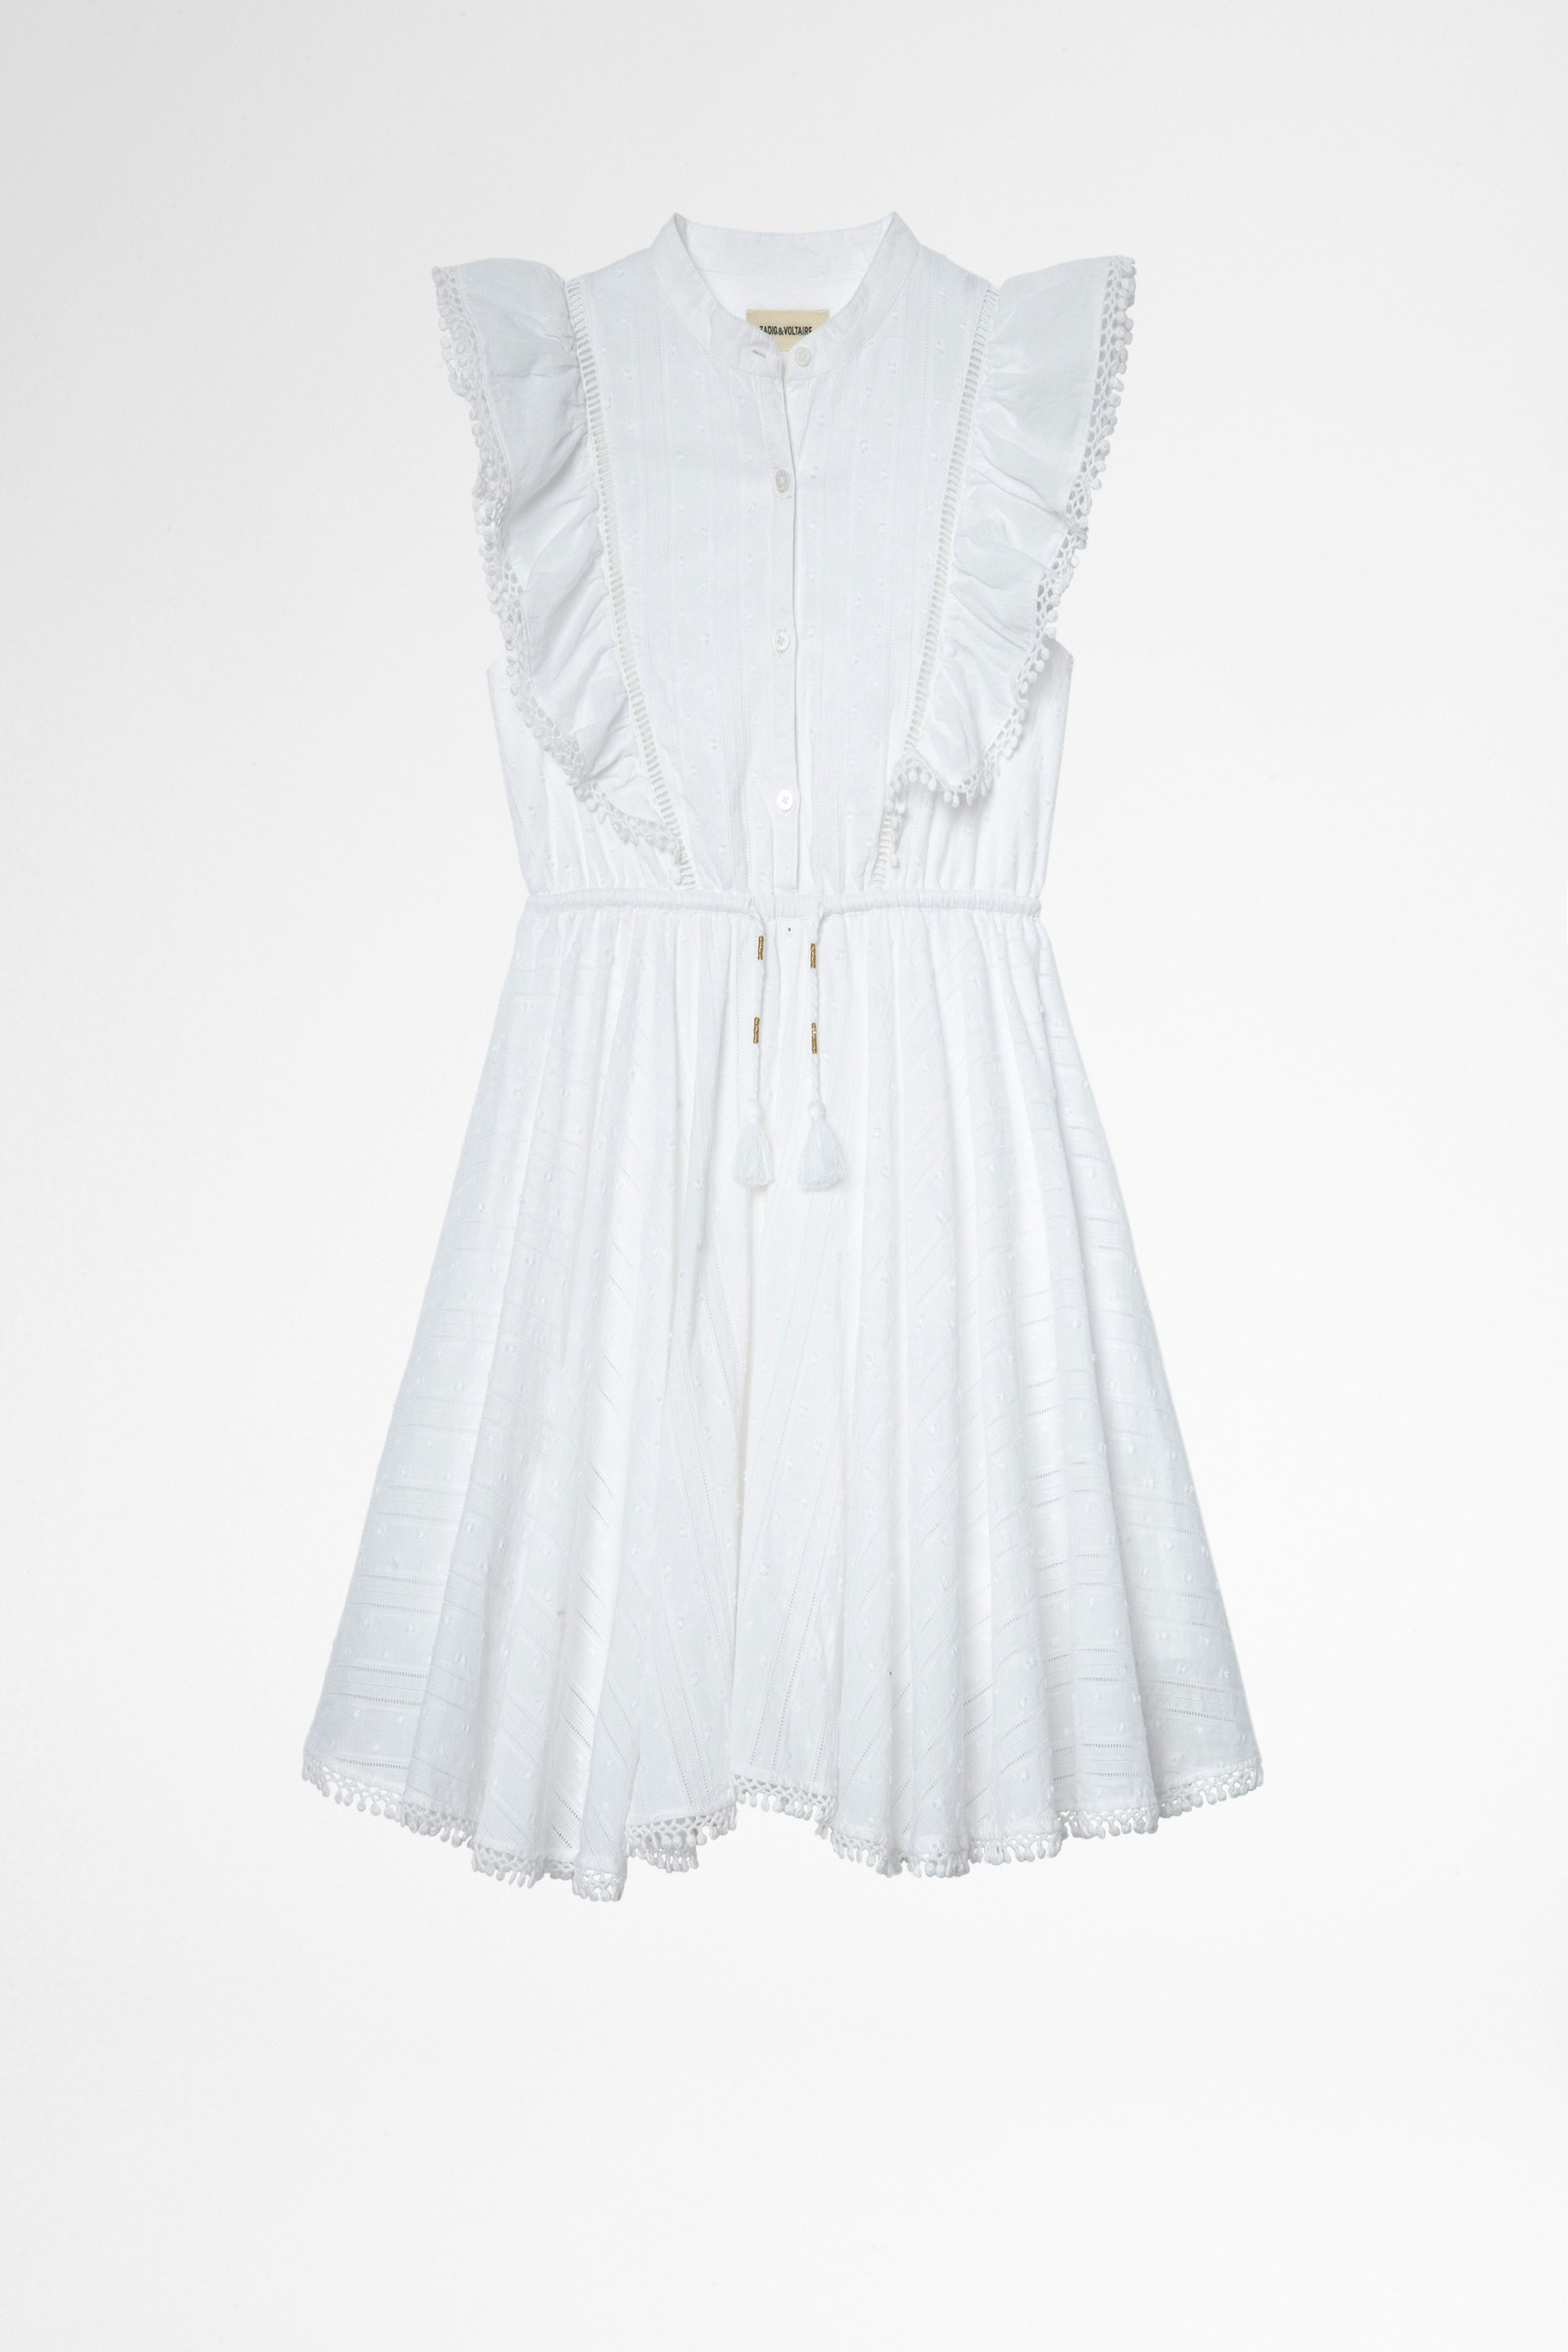 Ranil Children's Dress Children's cotton dress in white